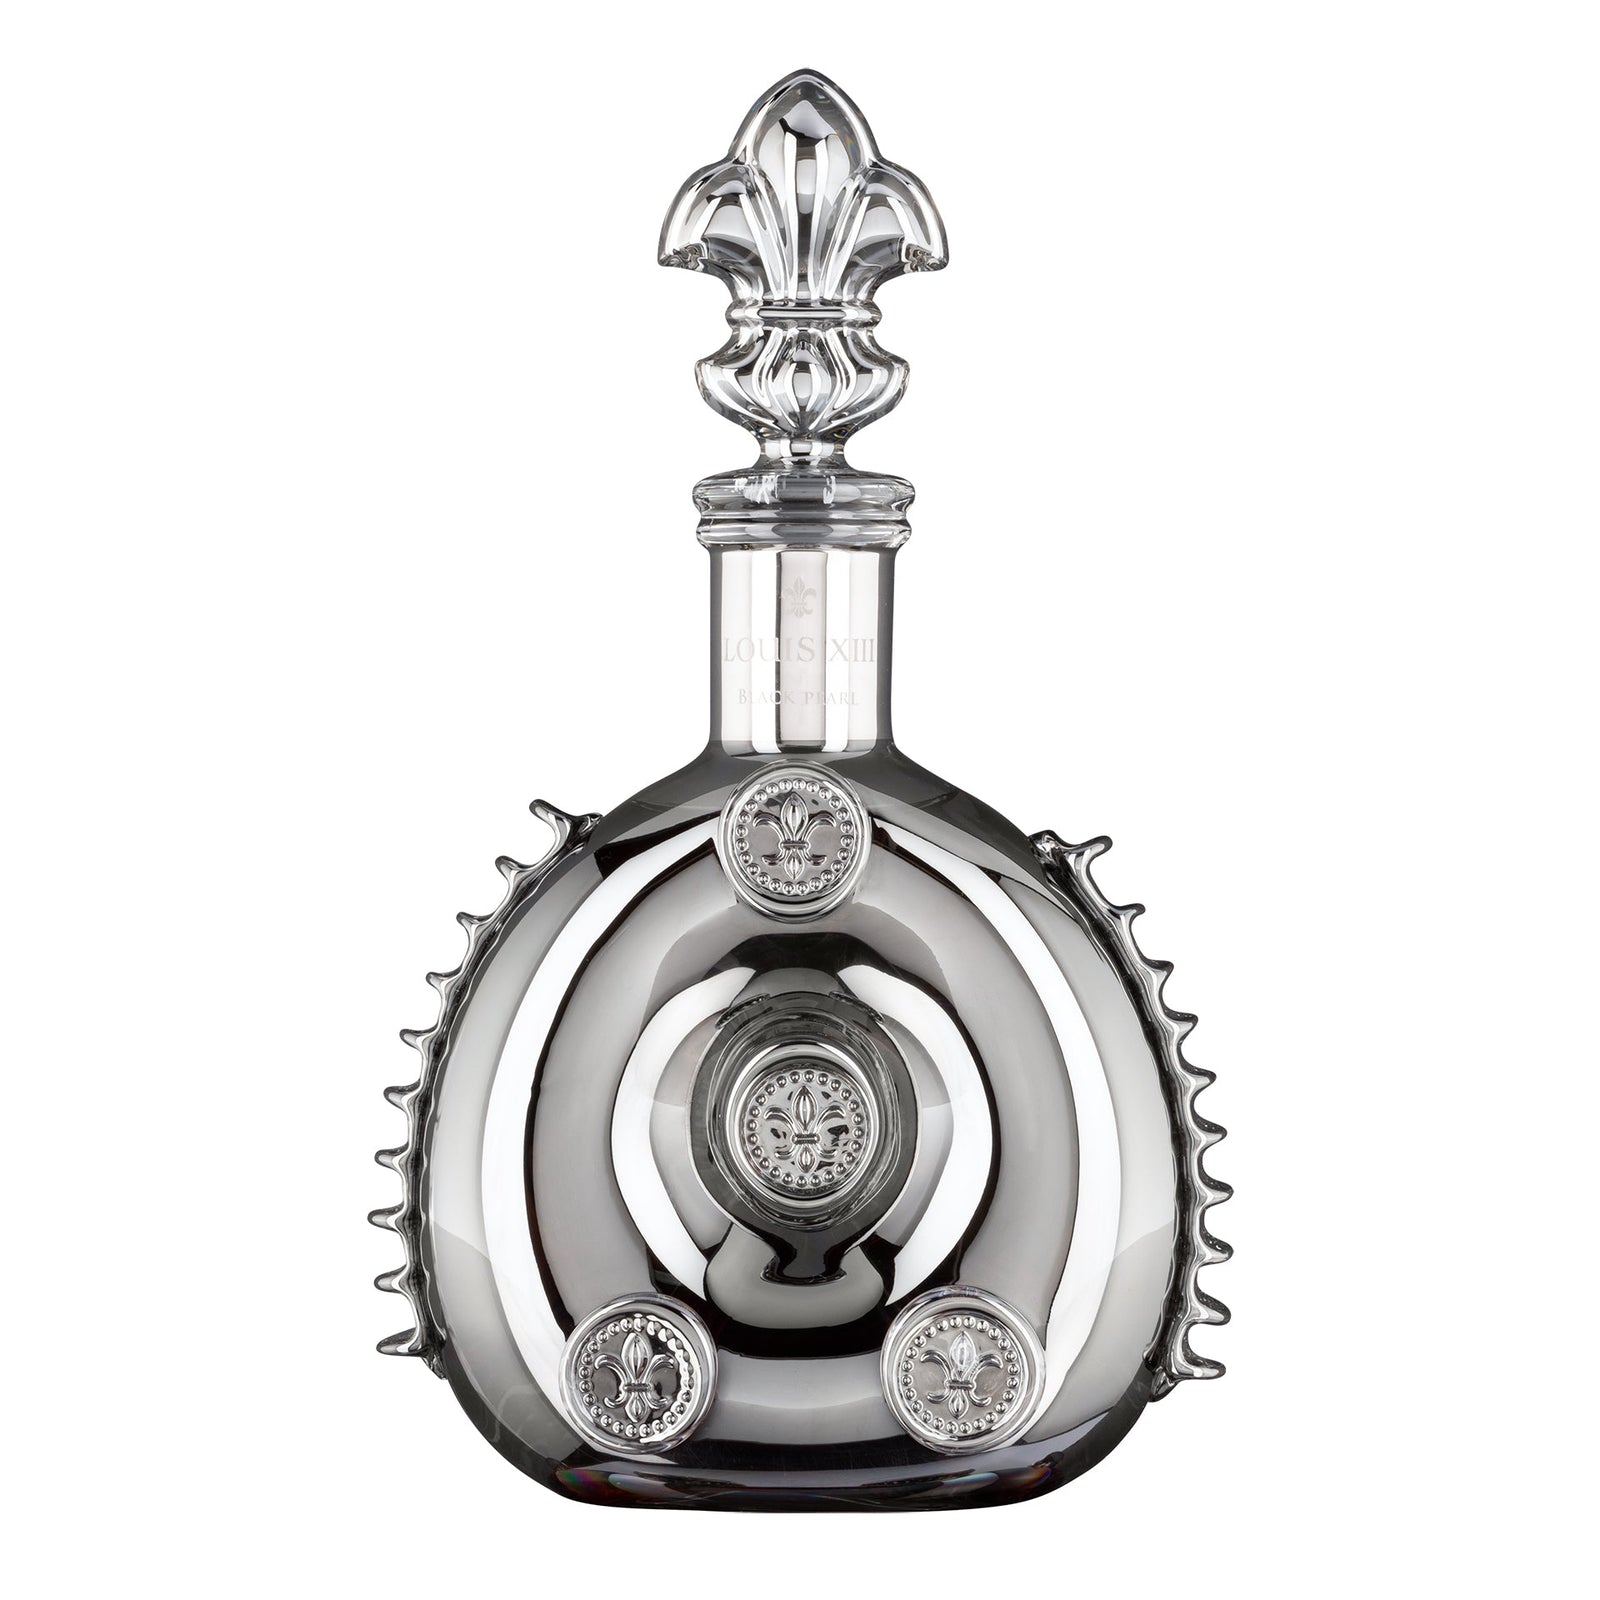 1 carafe Cognac Louis XIII Remy Martin Black Pearl Anniv…